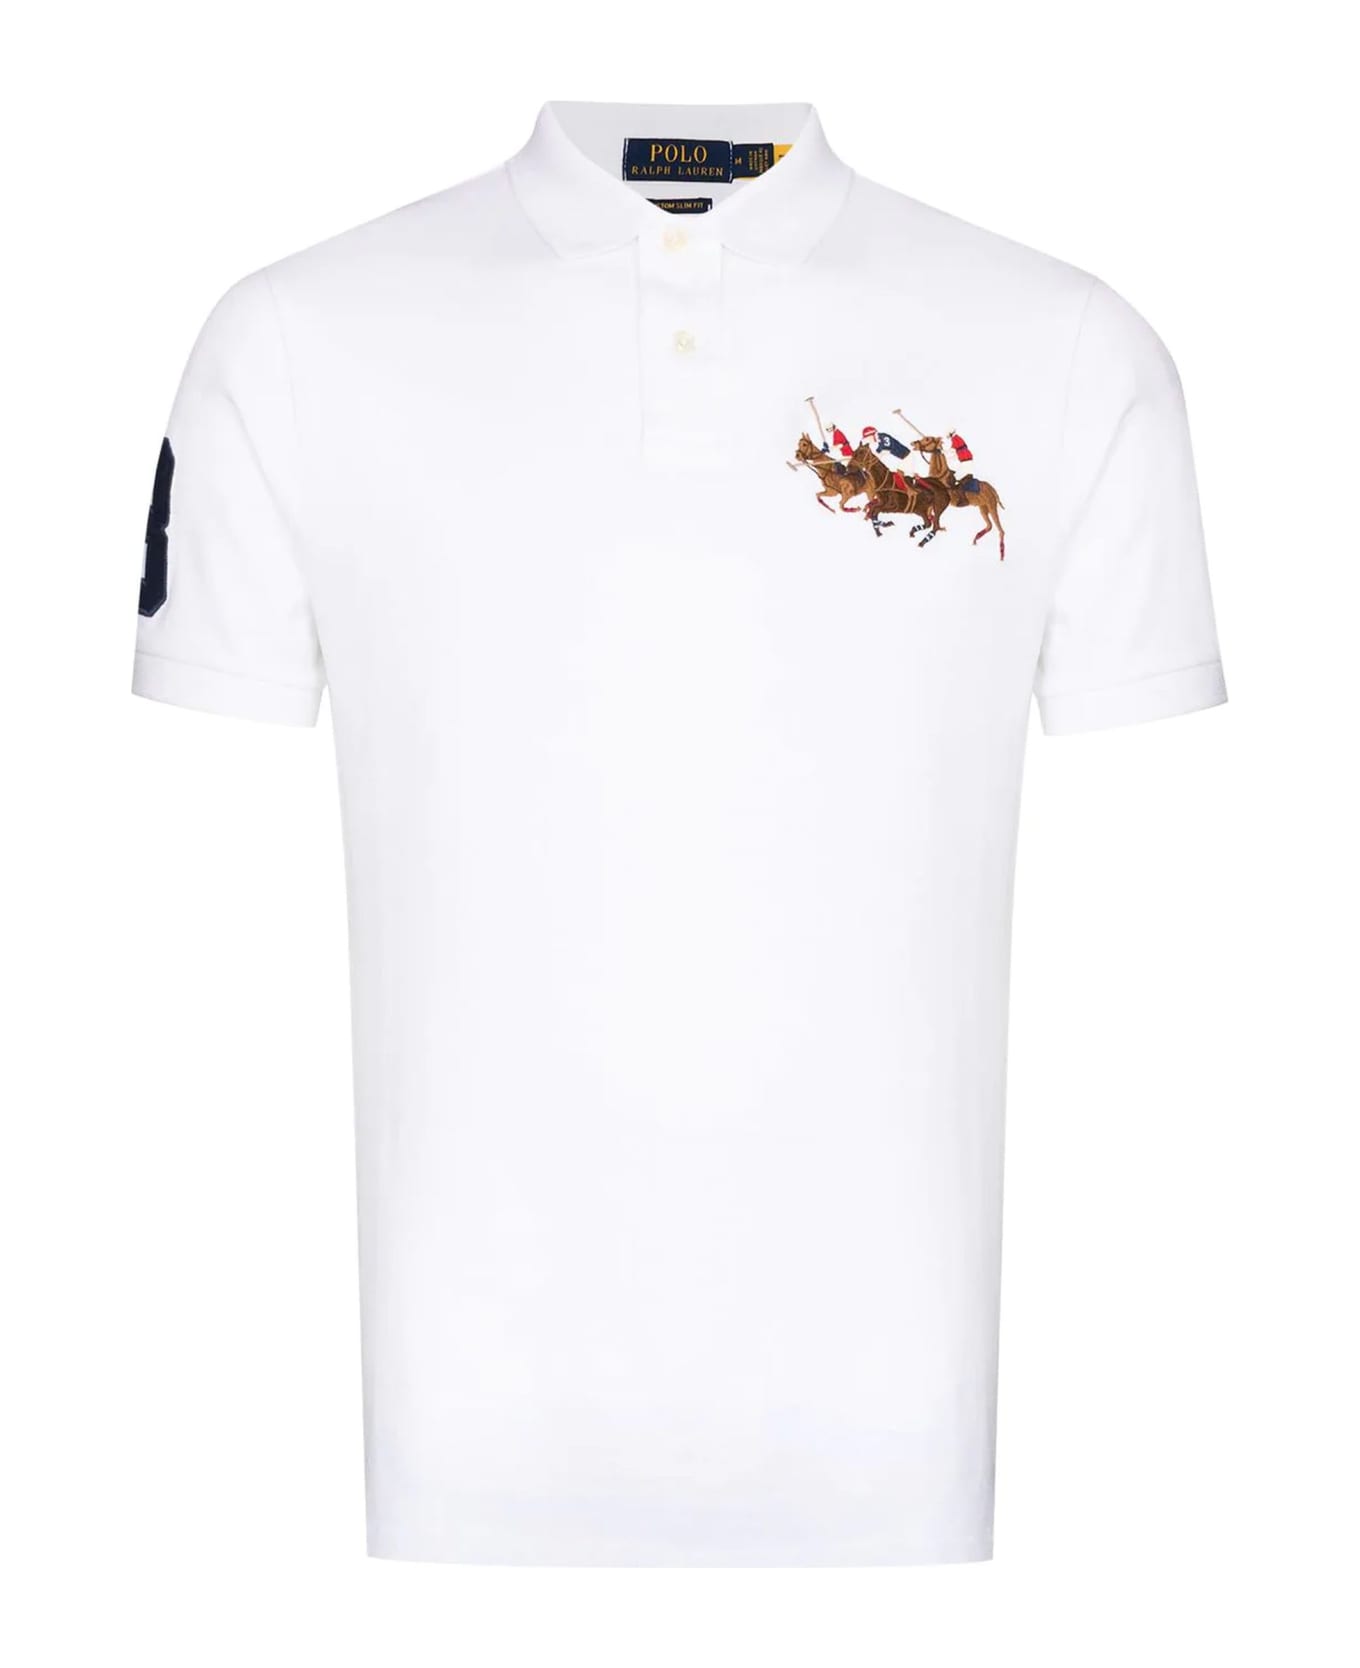 Polo Ralph Lauren White Cotton Polo Shirt - White ポロシャツ